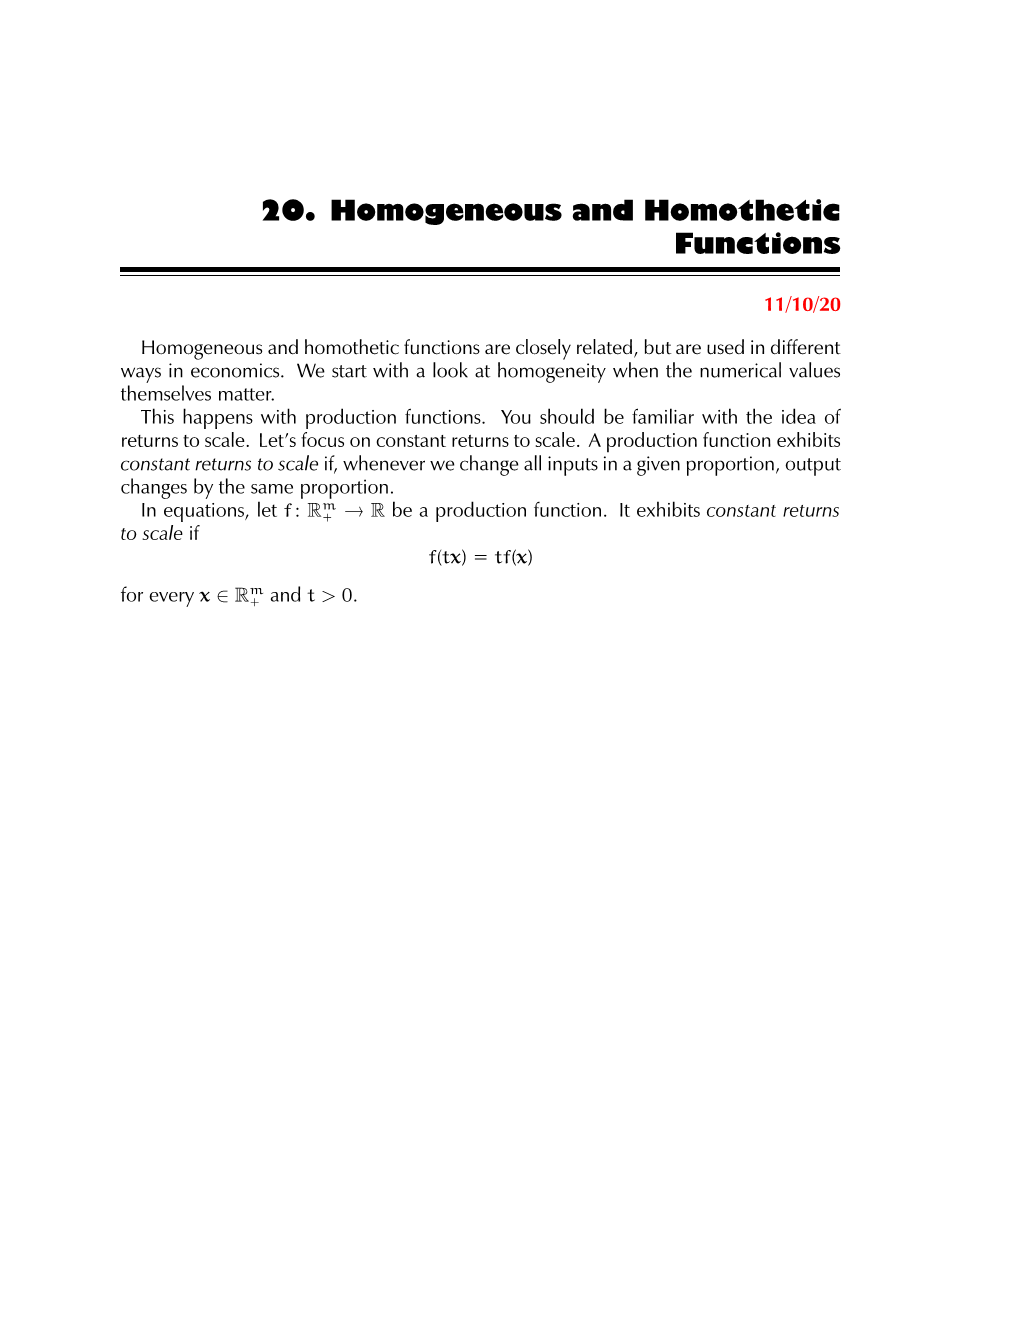 20. Homogeneous and Homothetic Functions